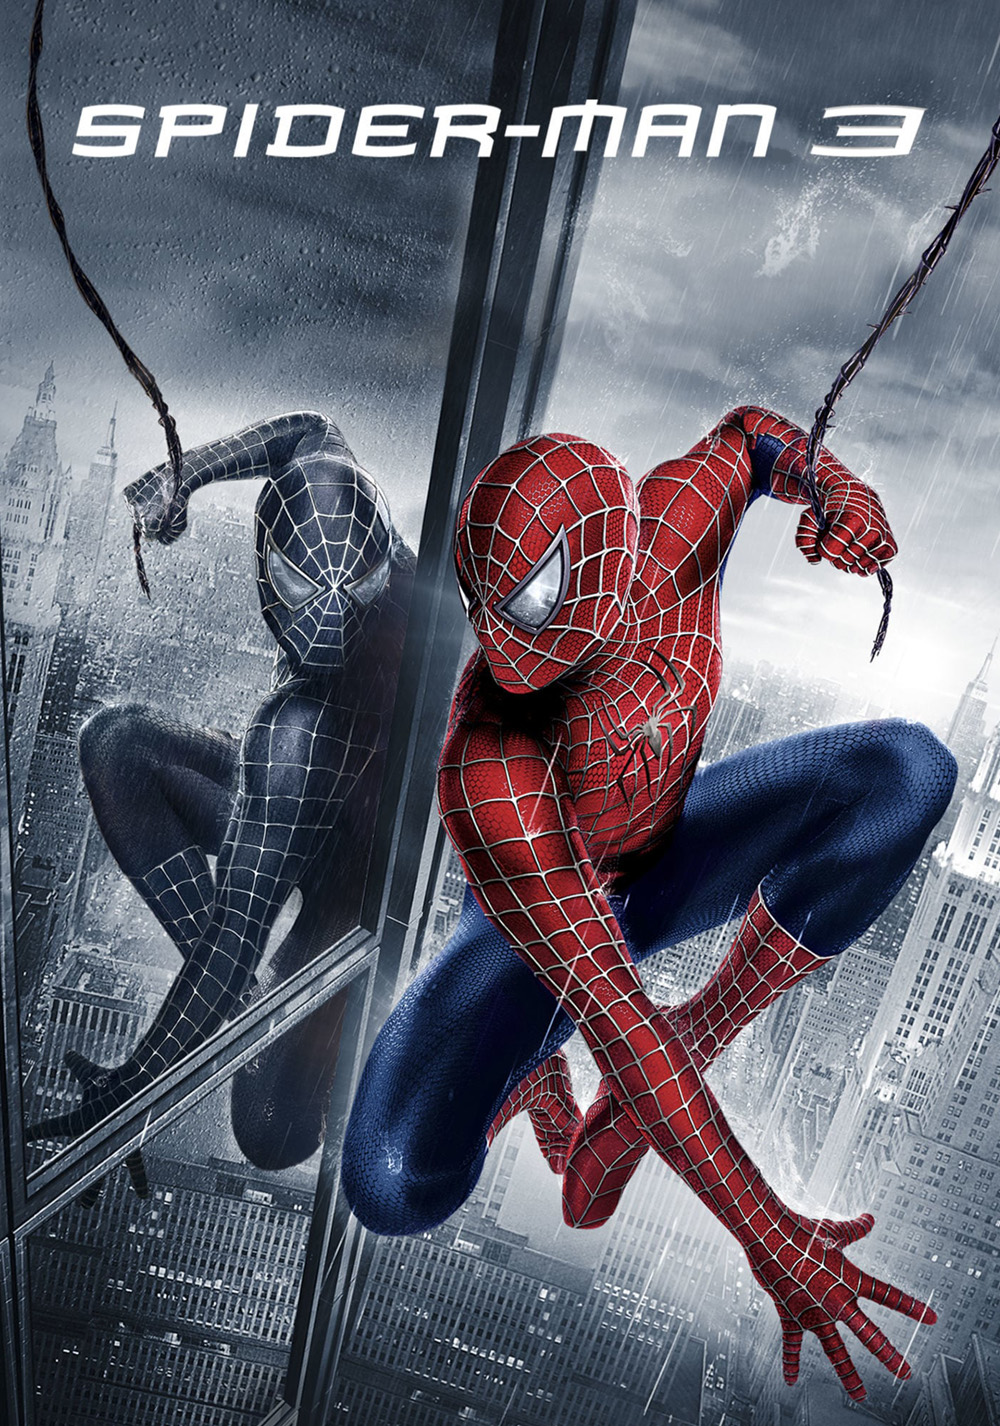 Spider-Man 3 Hindi Dubbed audio track BrRip - Movies audio ...